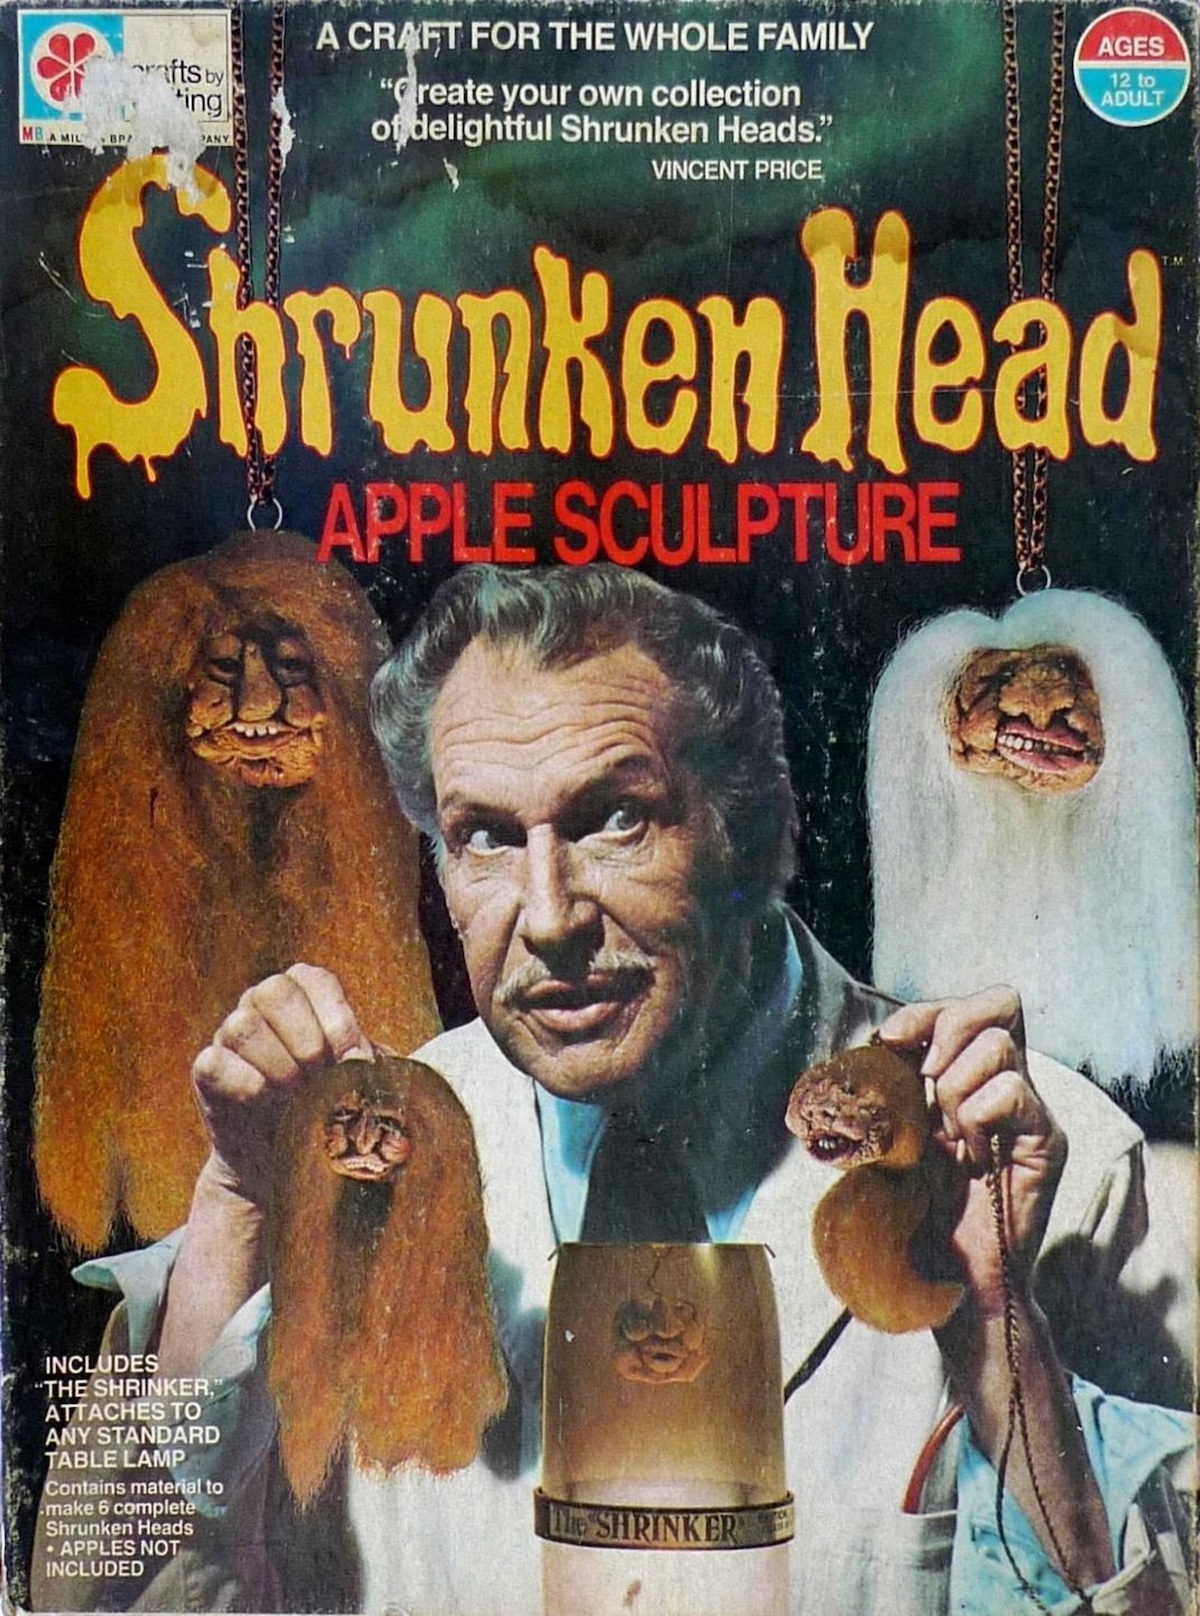 Vincent Price shrunken head apple sculpture